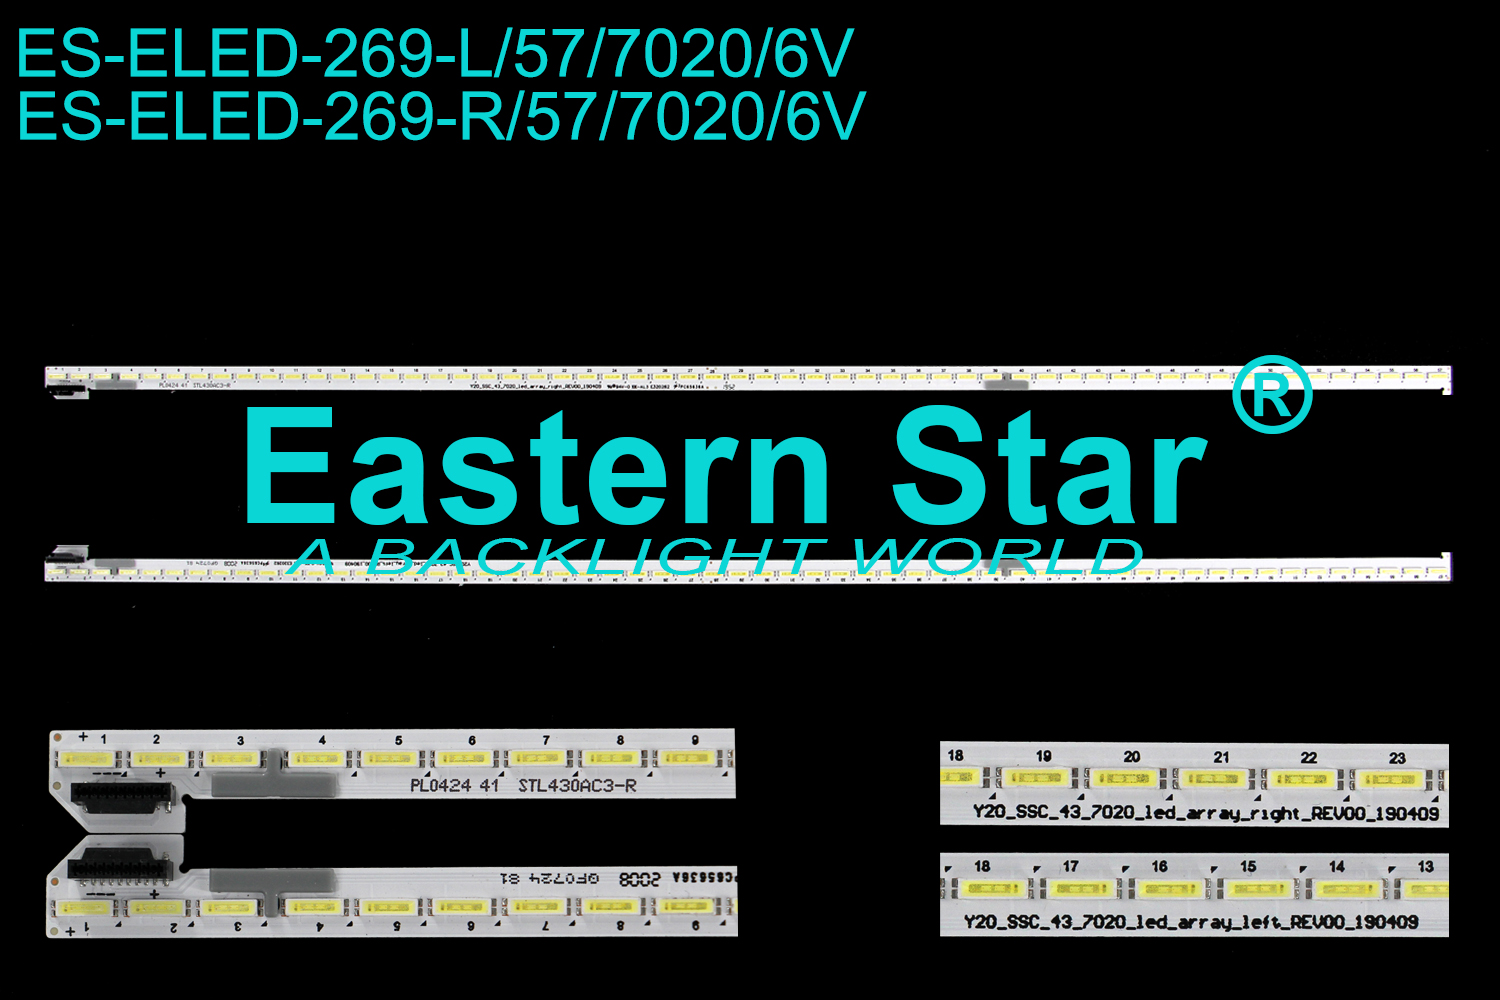 ES-ELED-269 ELED/EDGE TV backlight use for 43'' Lg PL0424 41 STL430AC3-L/R Y20_43_7020 LCD_ARRAY_LEFT_REV00_190409 LED STRIPS(2)